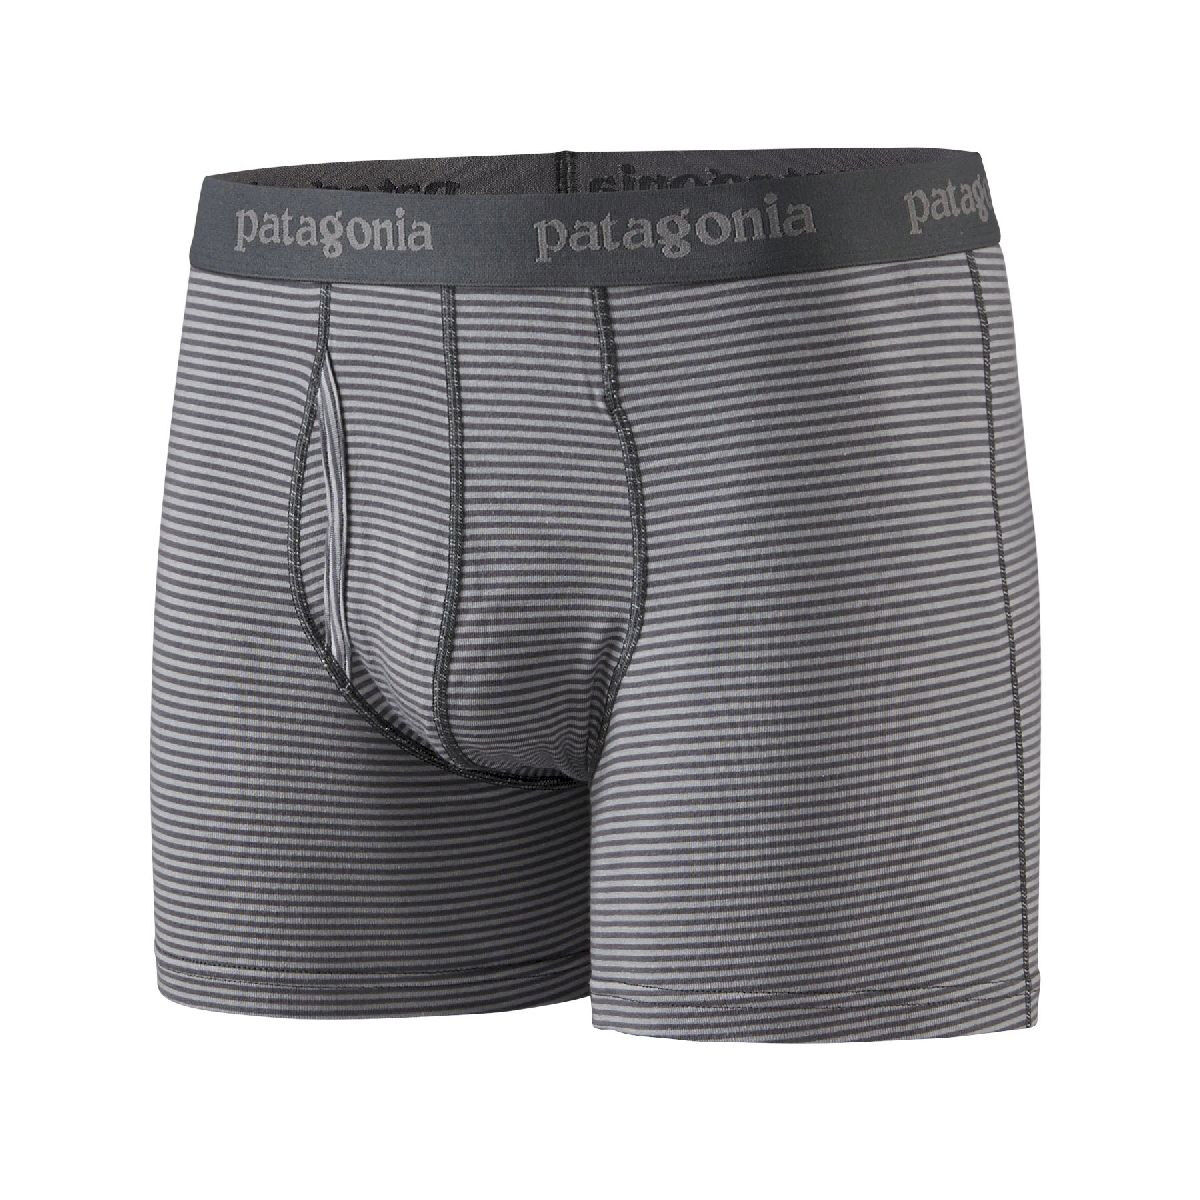 Patagonia - Essential Boxer Briefs - 3" - Maglietta intima - Uomo